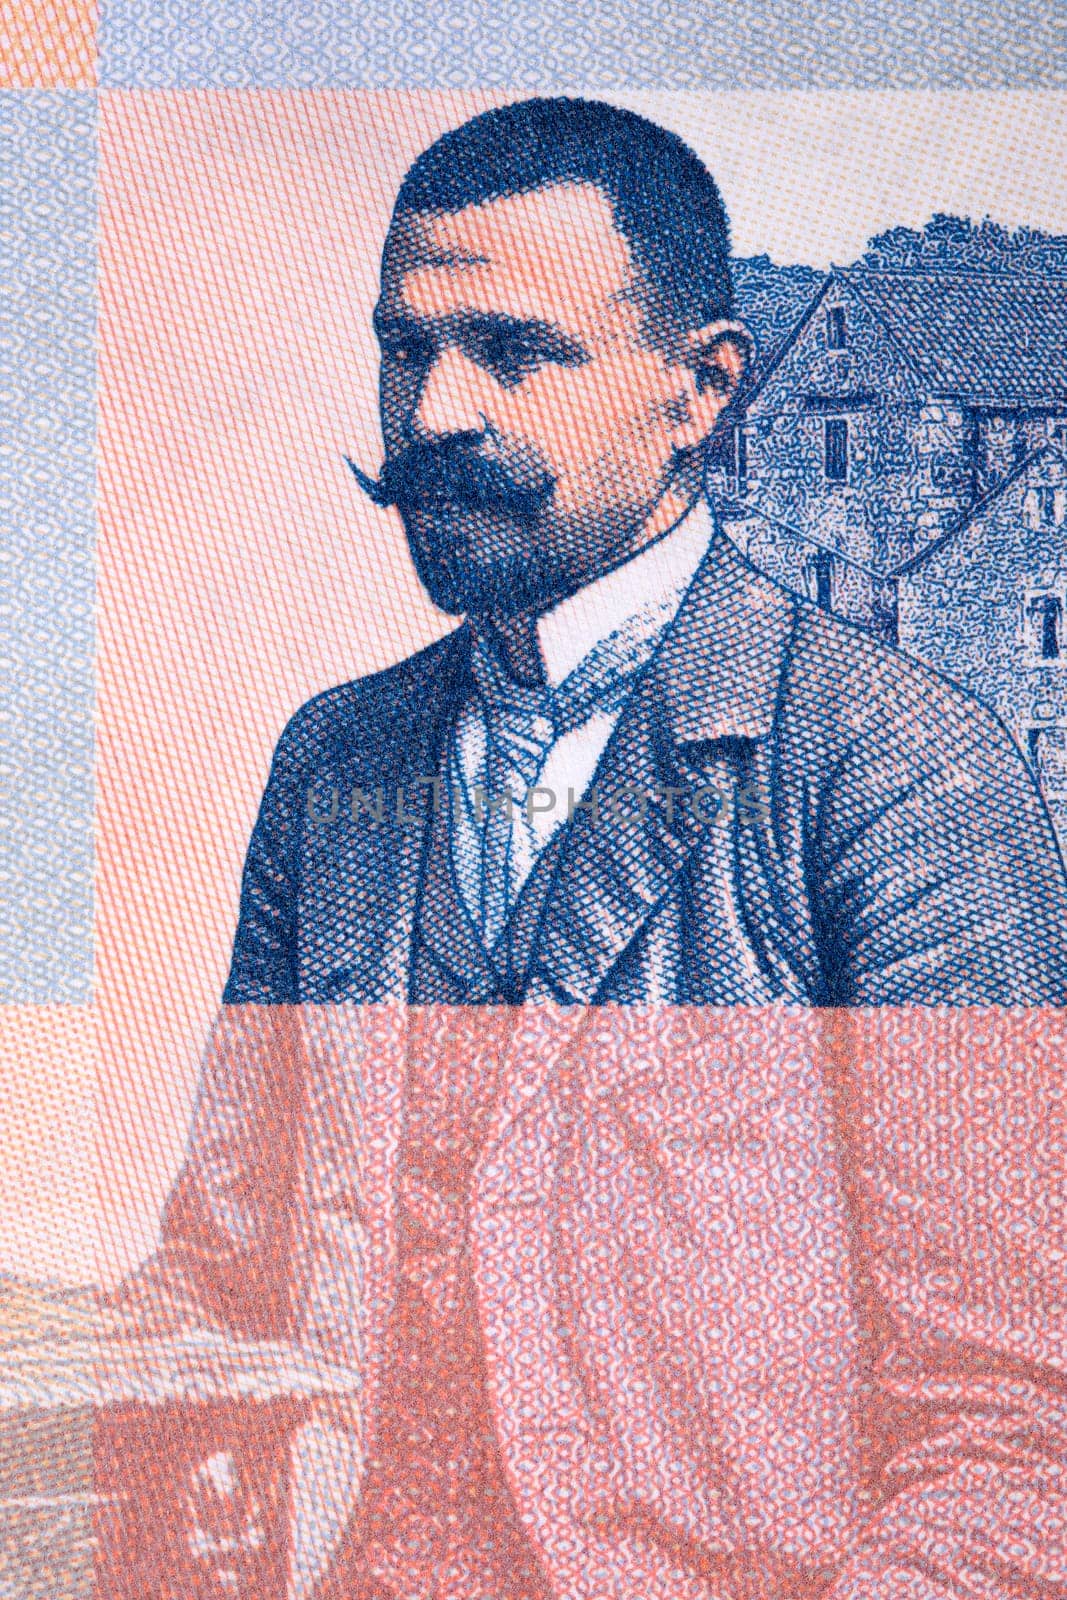 Matej Bencur a portrait from Czechoslovak money